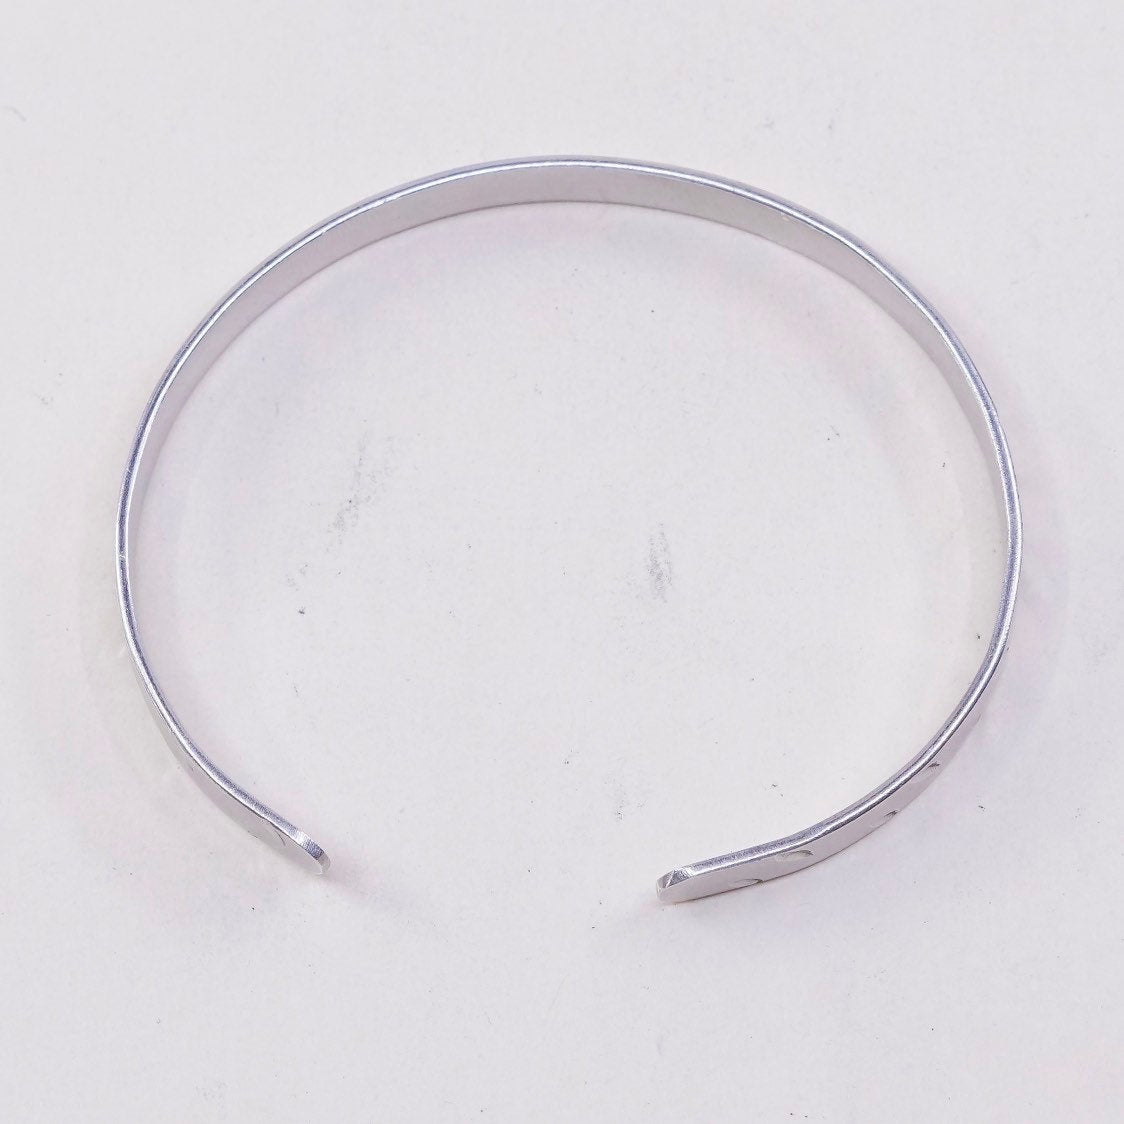 6.75”, vtg southwestern Sterling silver bracelet, modern handmade 925 cuff